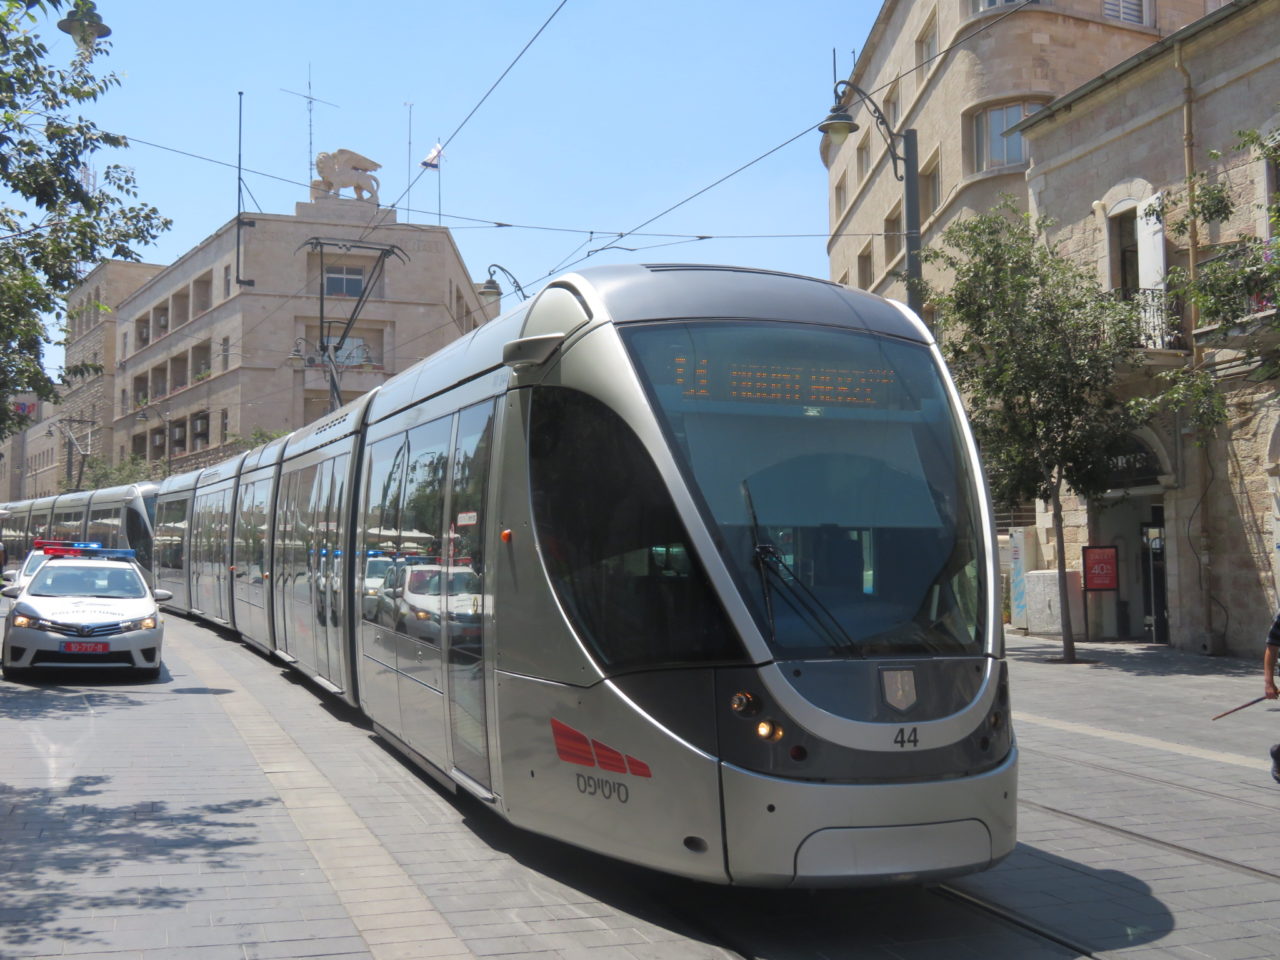 The joys of walking Jerusalem - Jerusalem has a modern network of trams, buses, taxis